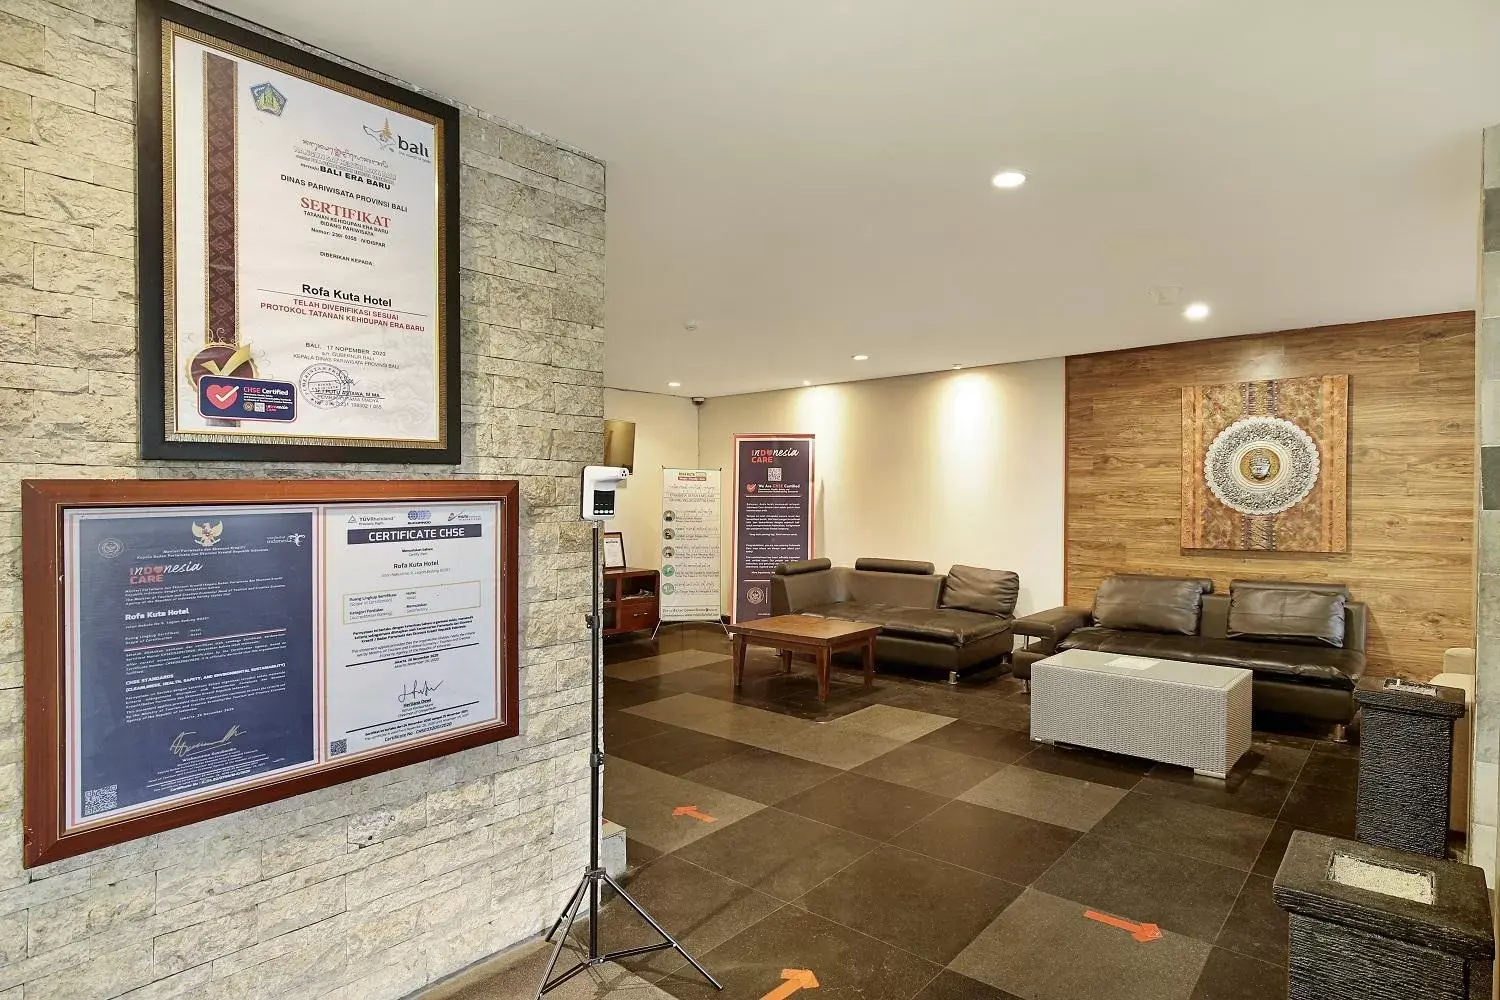 Lobby or reception in Rofa Kuta Hotel - CHSE Certified